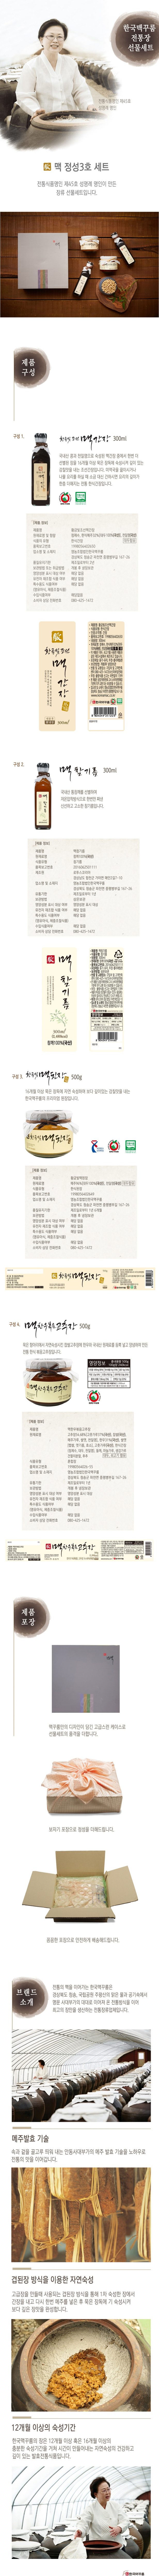 jeongseong_3ho_800.jpg